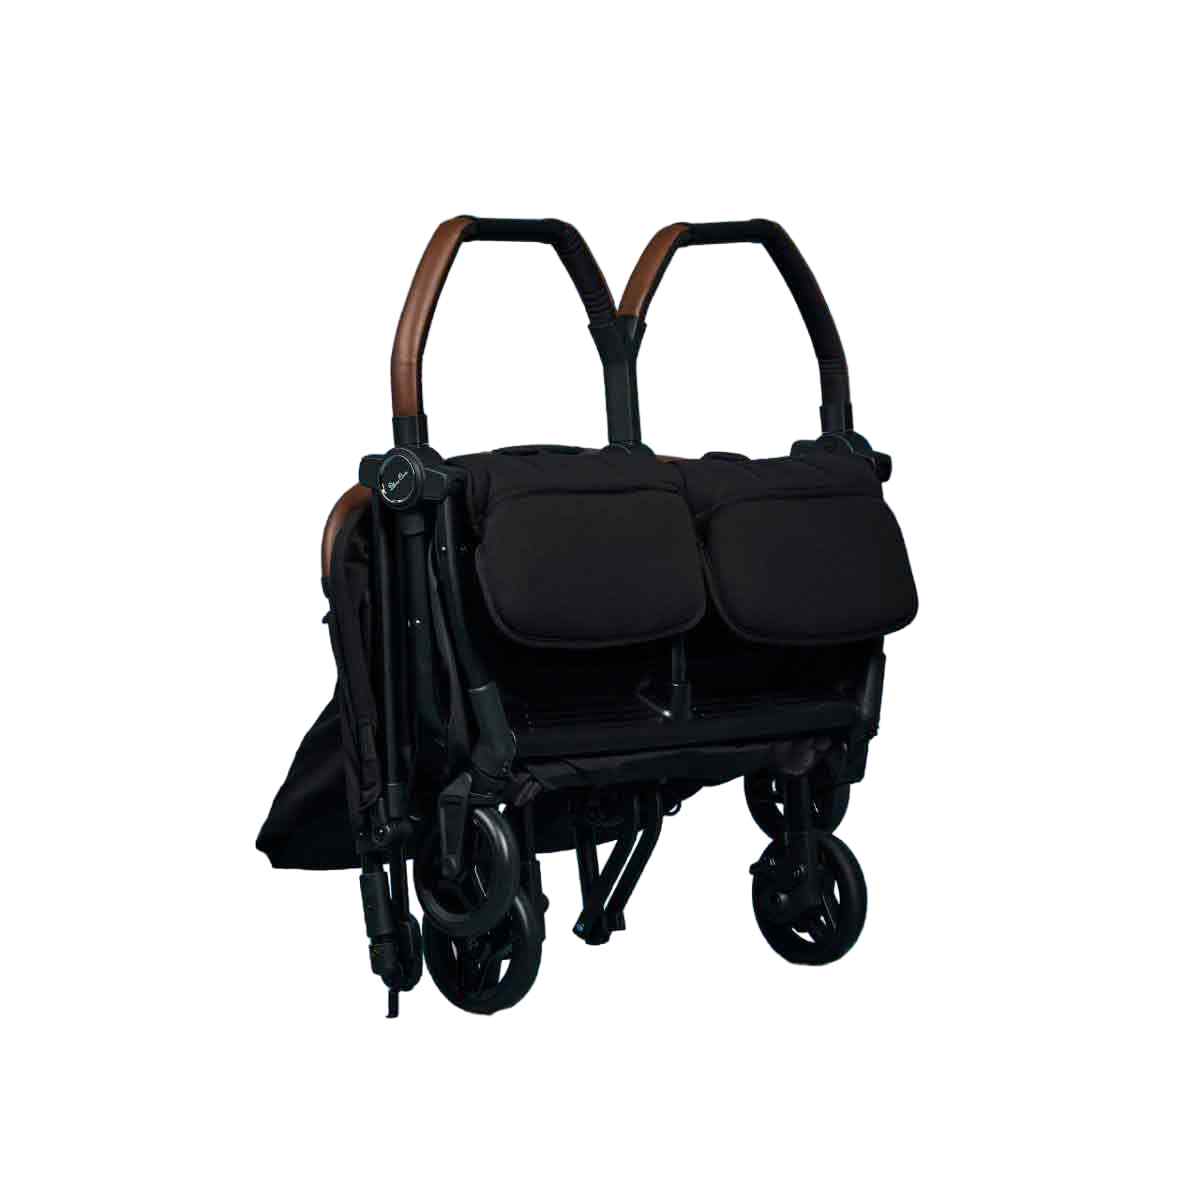 Silver Cross Jet Double Travel Stroller, Black - Available September, 5055836928757 - ANB Baby